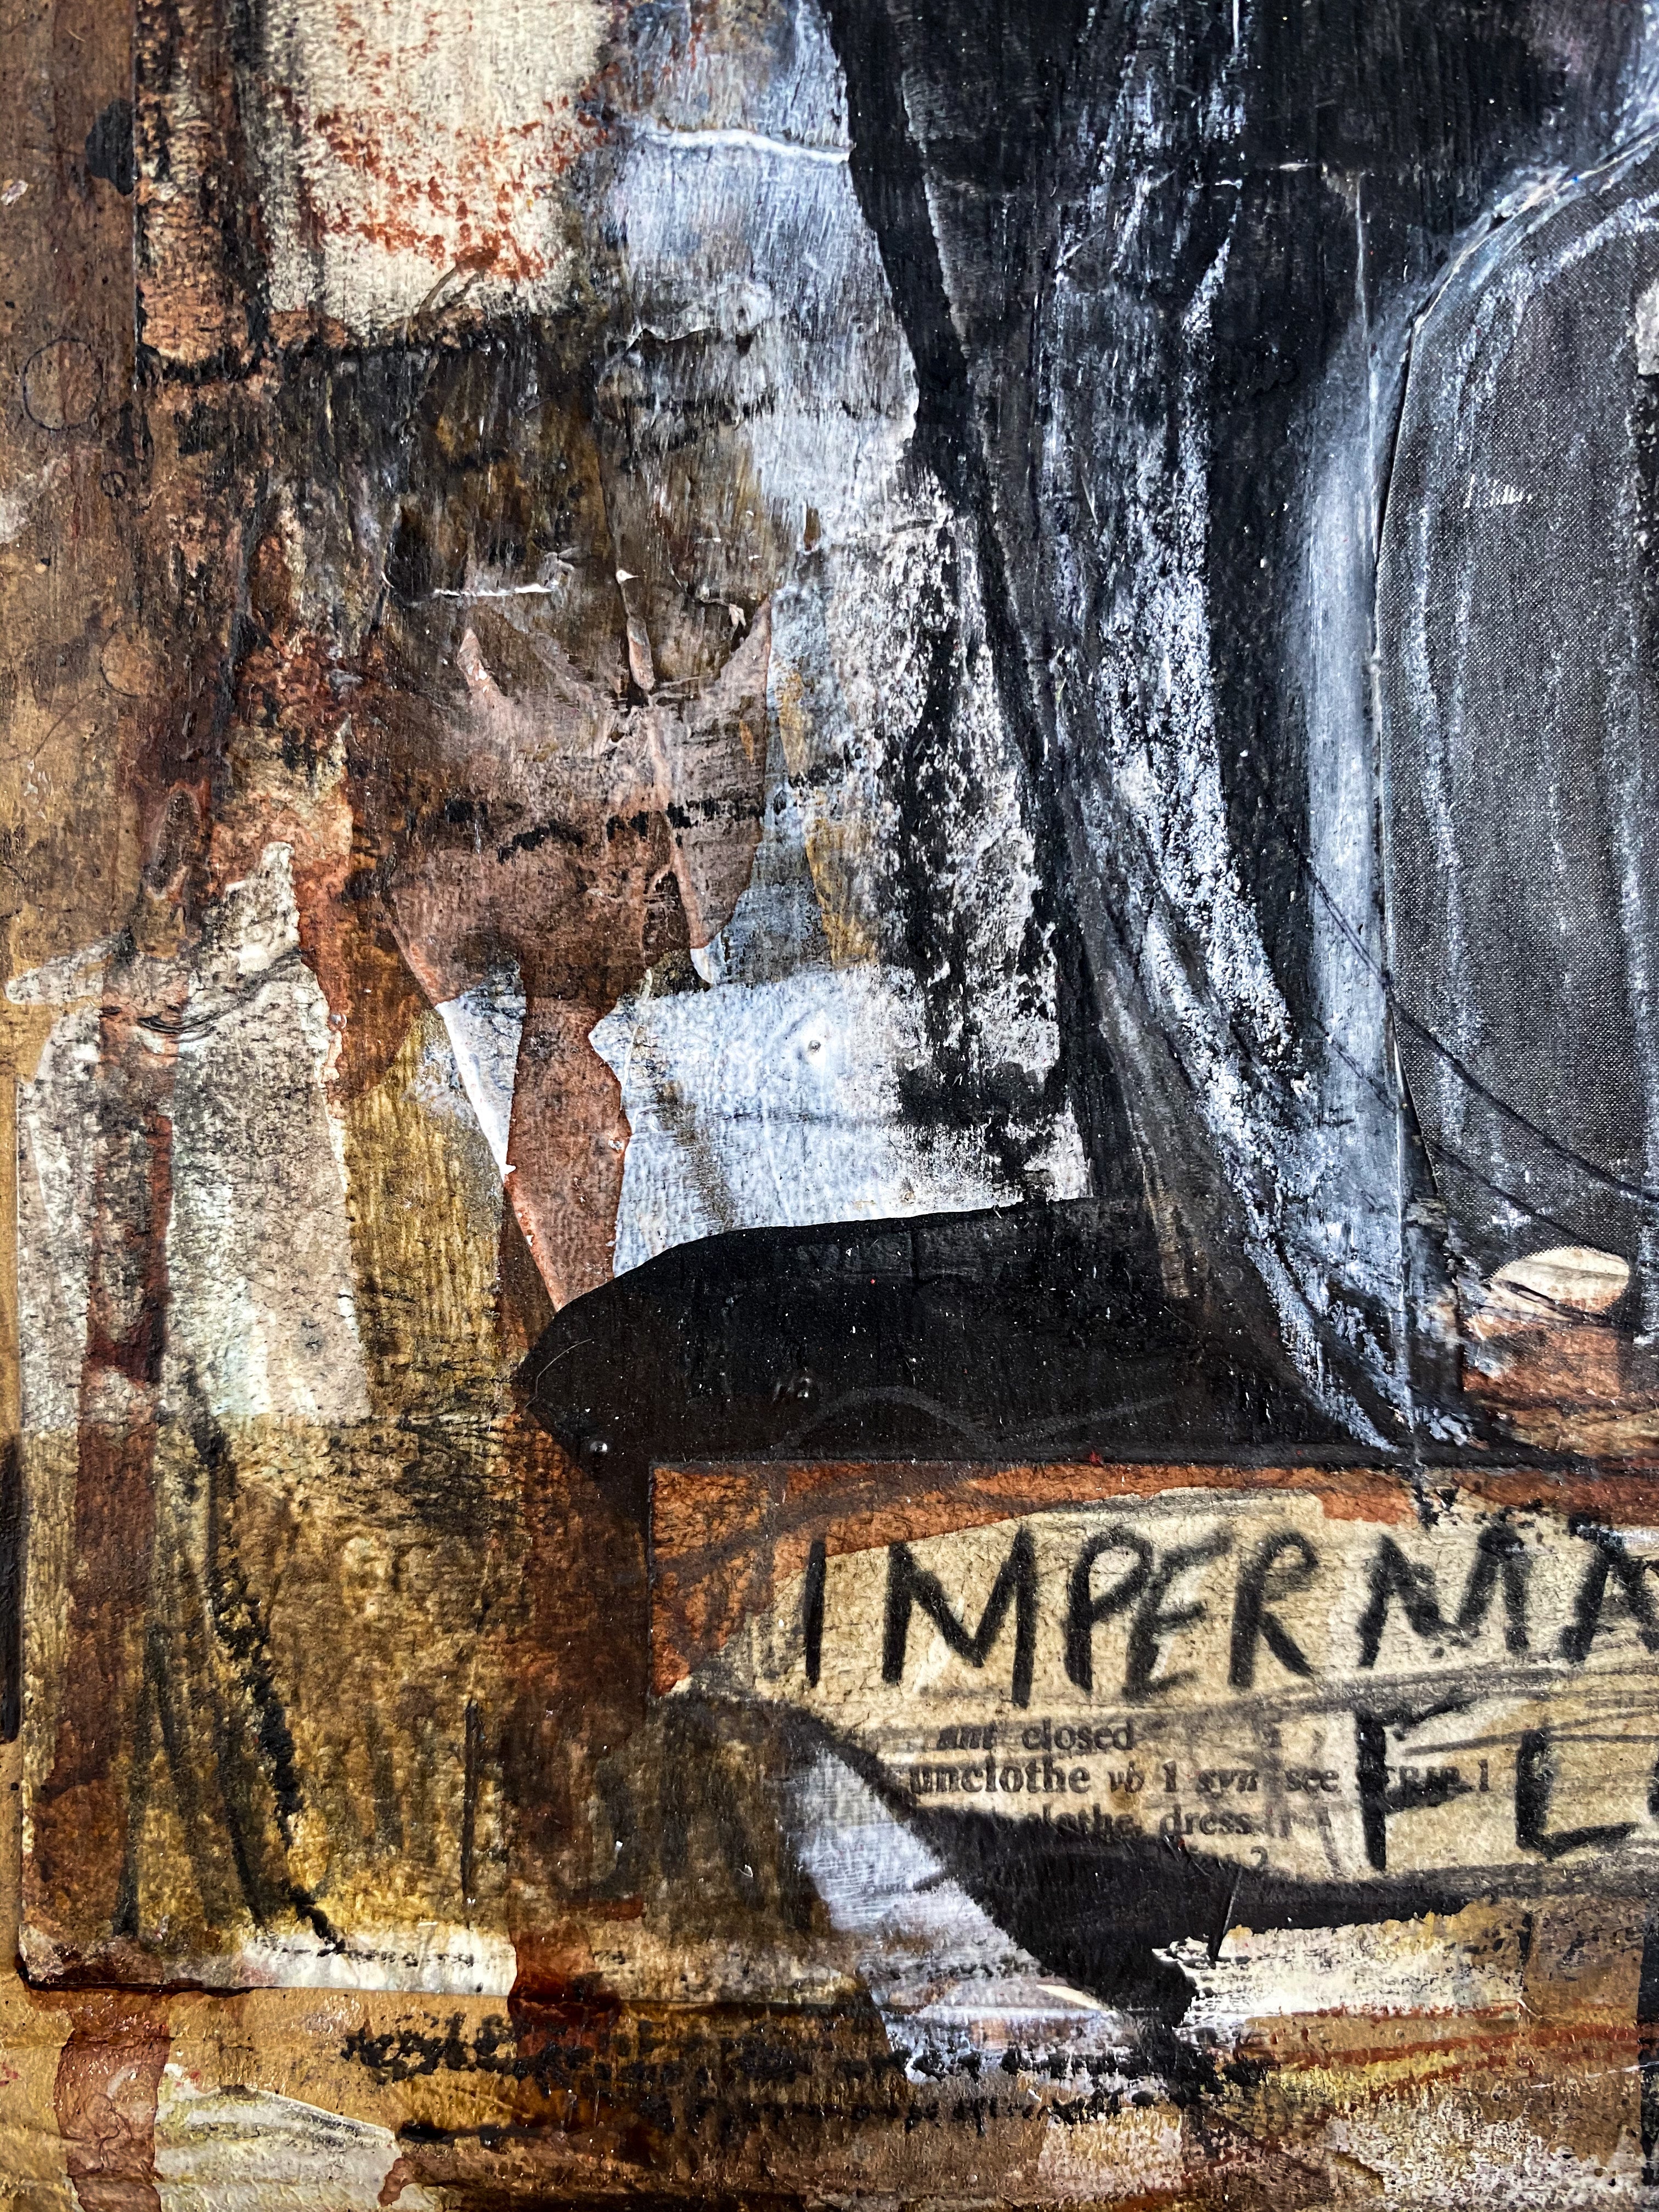 Impermanent Flow - Original Mixed Media Collage